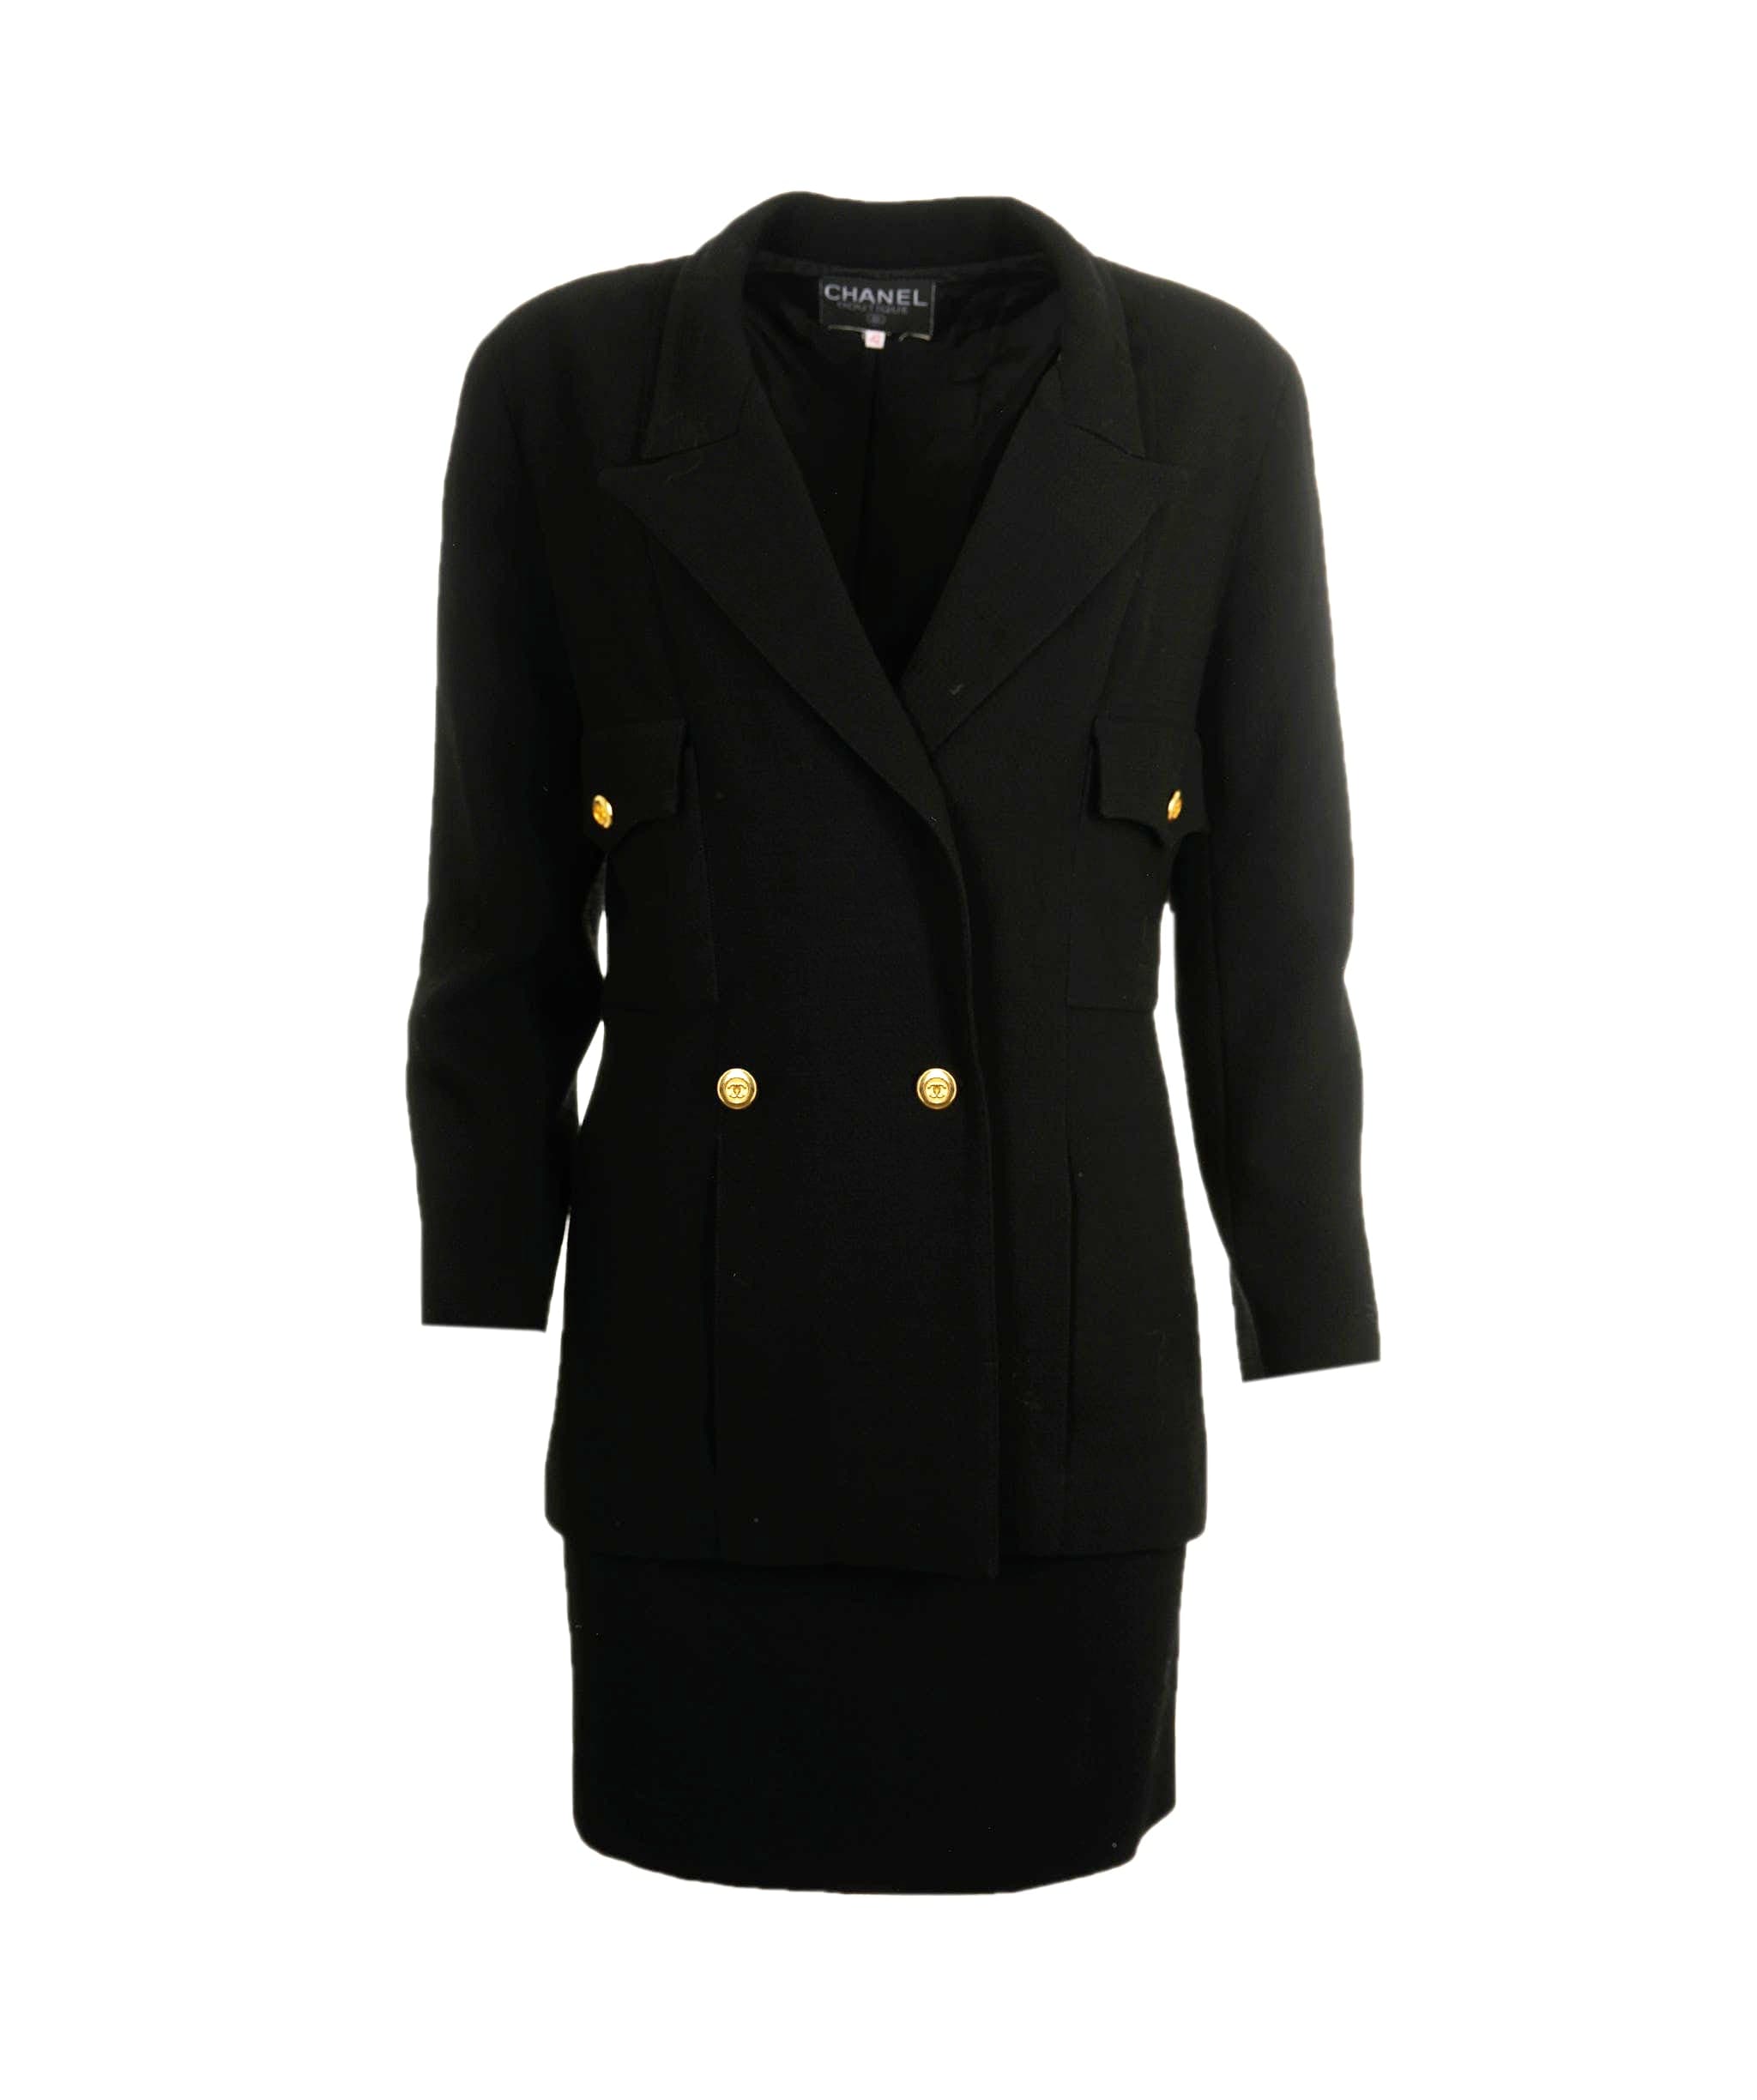 Chanel Chanel #42 Double Breasted Setup Suit Jacket Skirt Black 69512 ASL9052